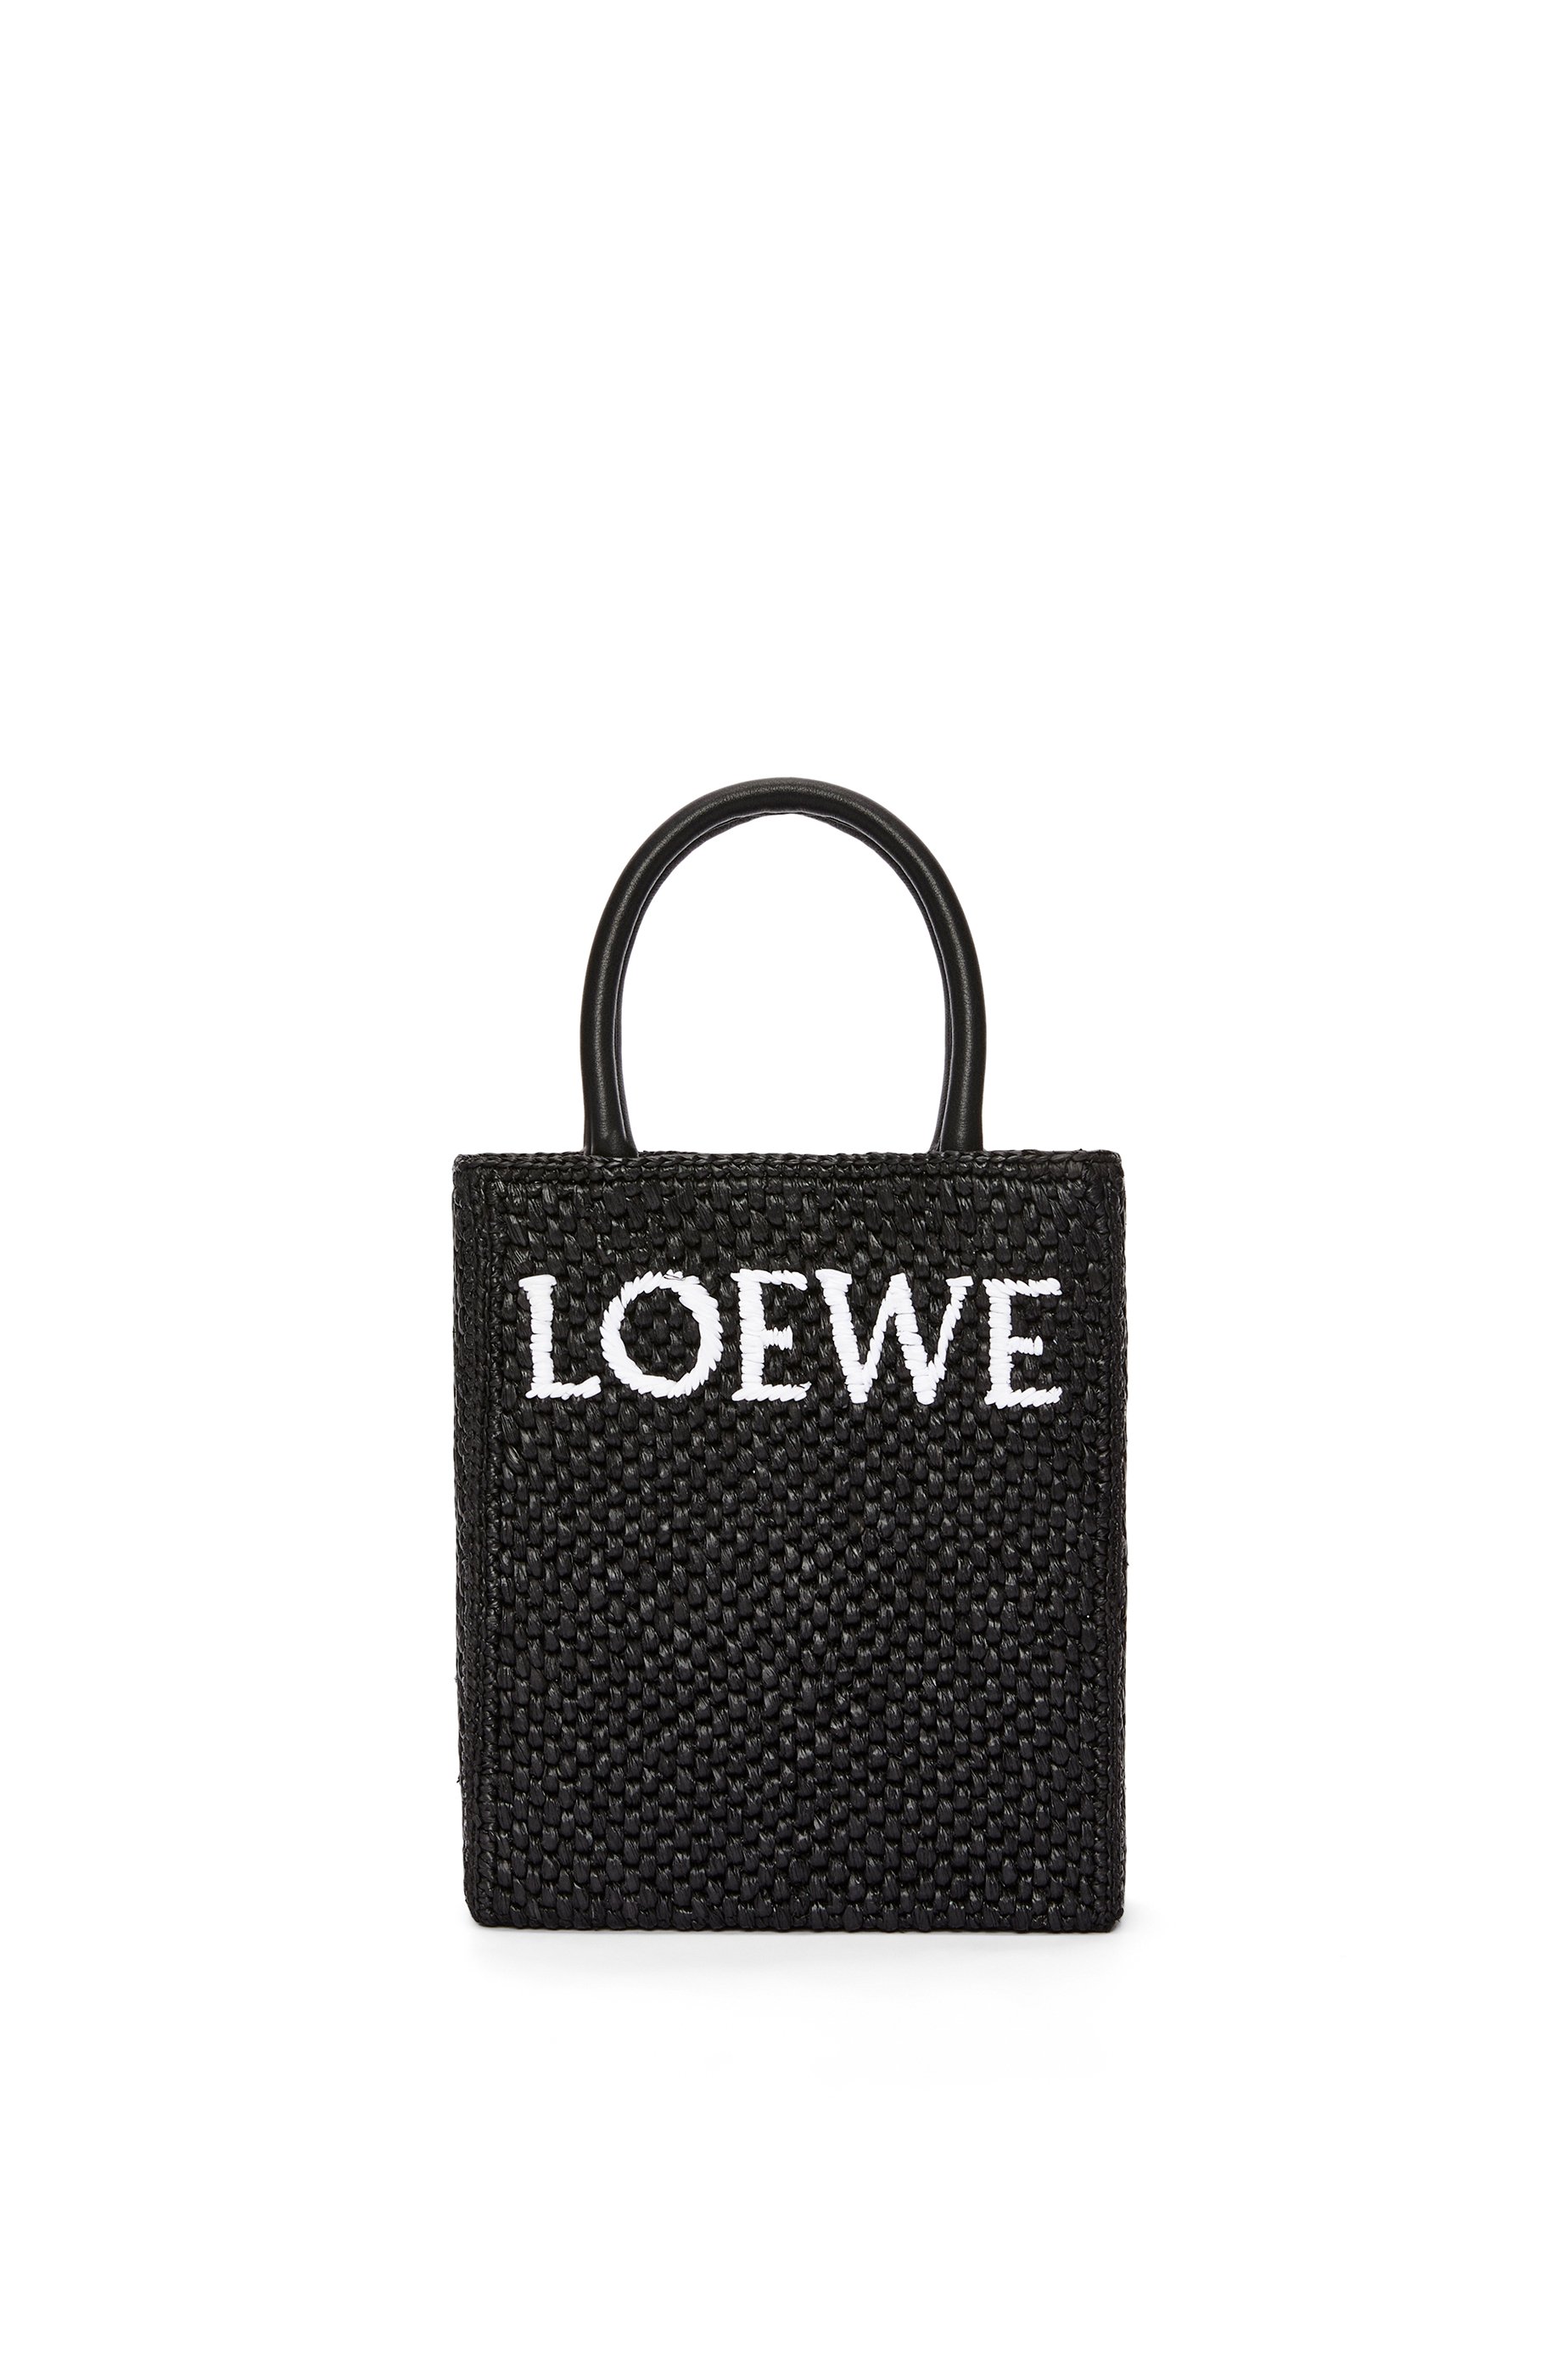 Loewe Brand Identity | lupon.gov.ph